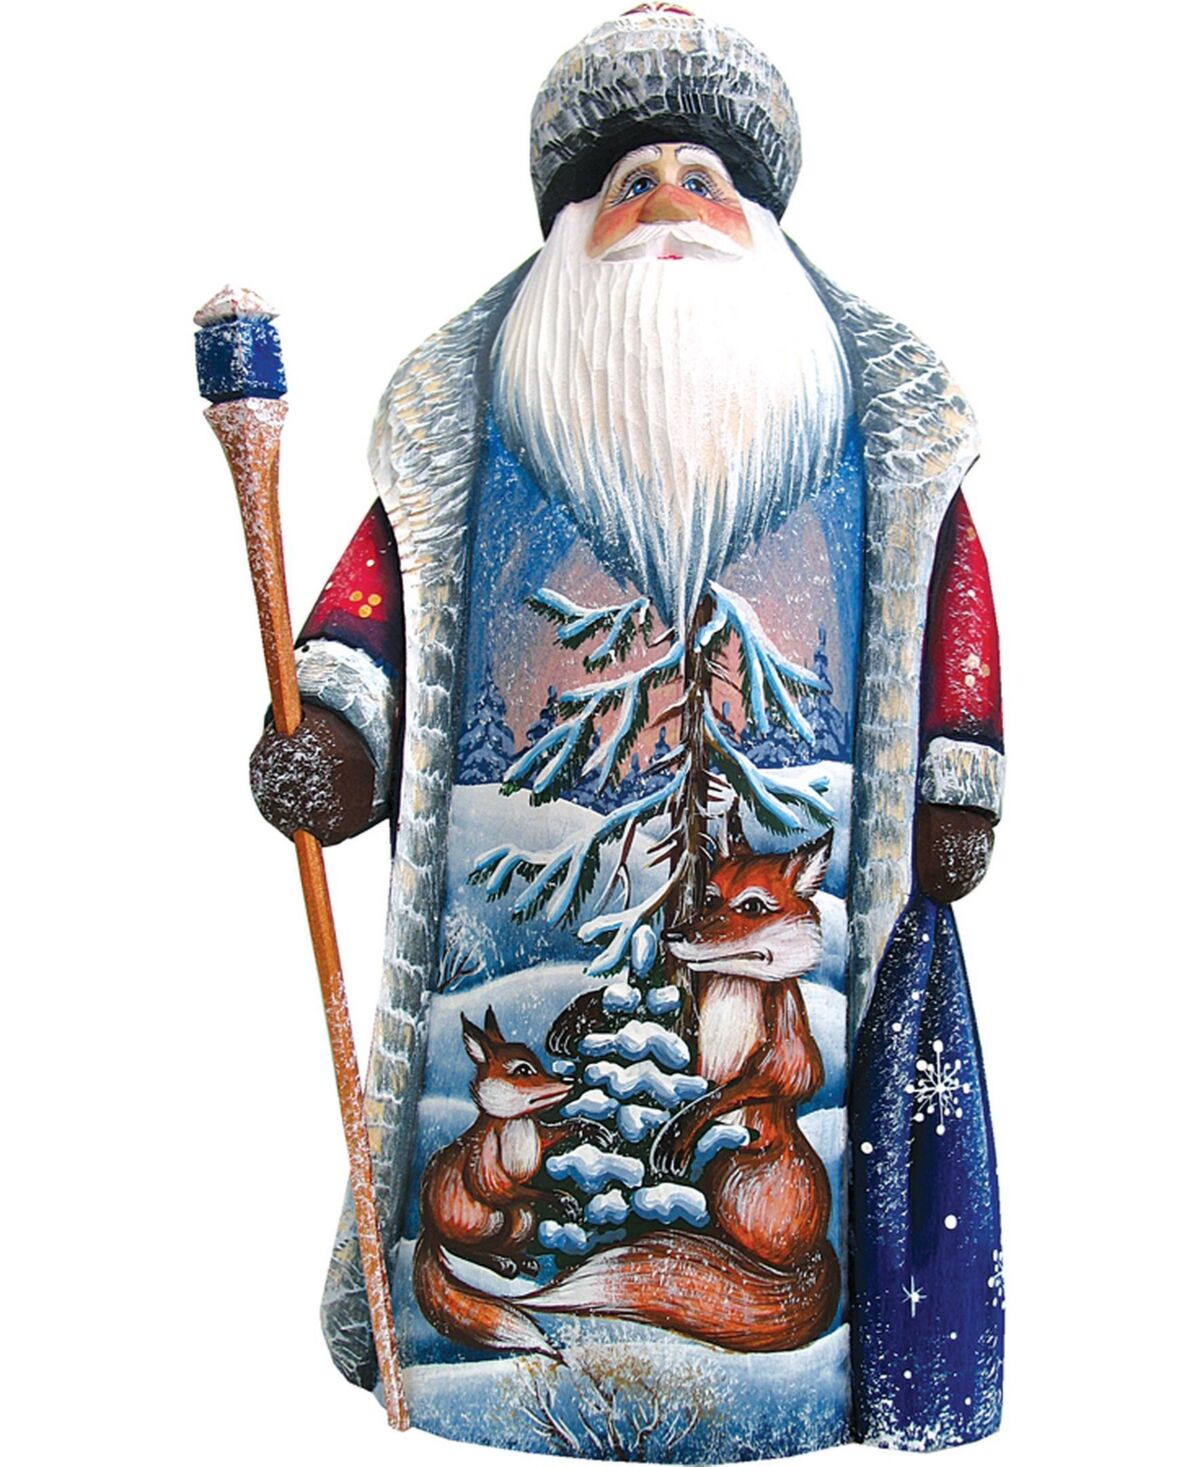 G.DeBrekht Woodcarved Hand Painted Fox Family Santa Wilderness Figurine - Multi